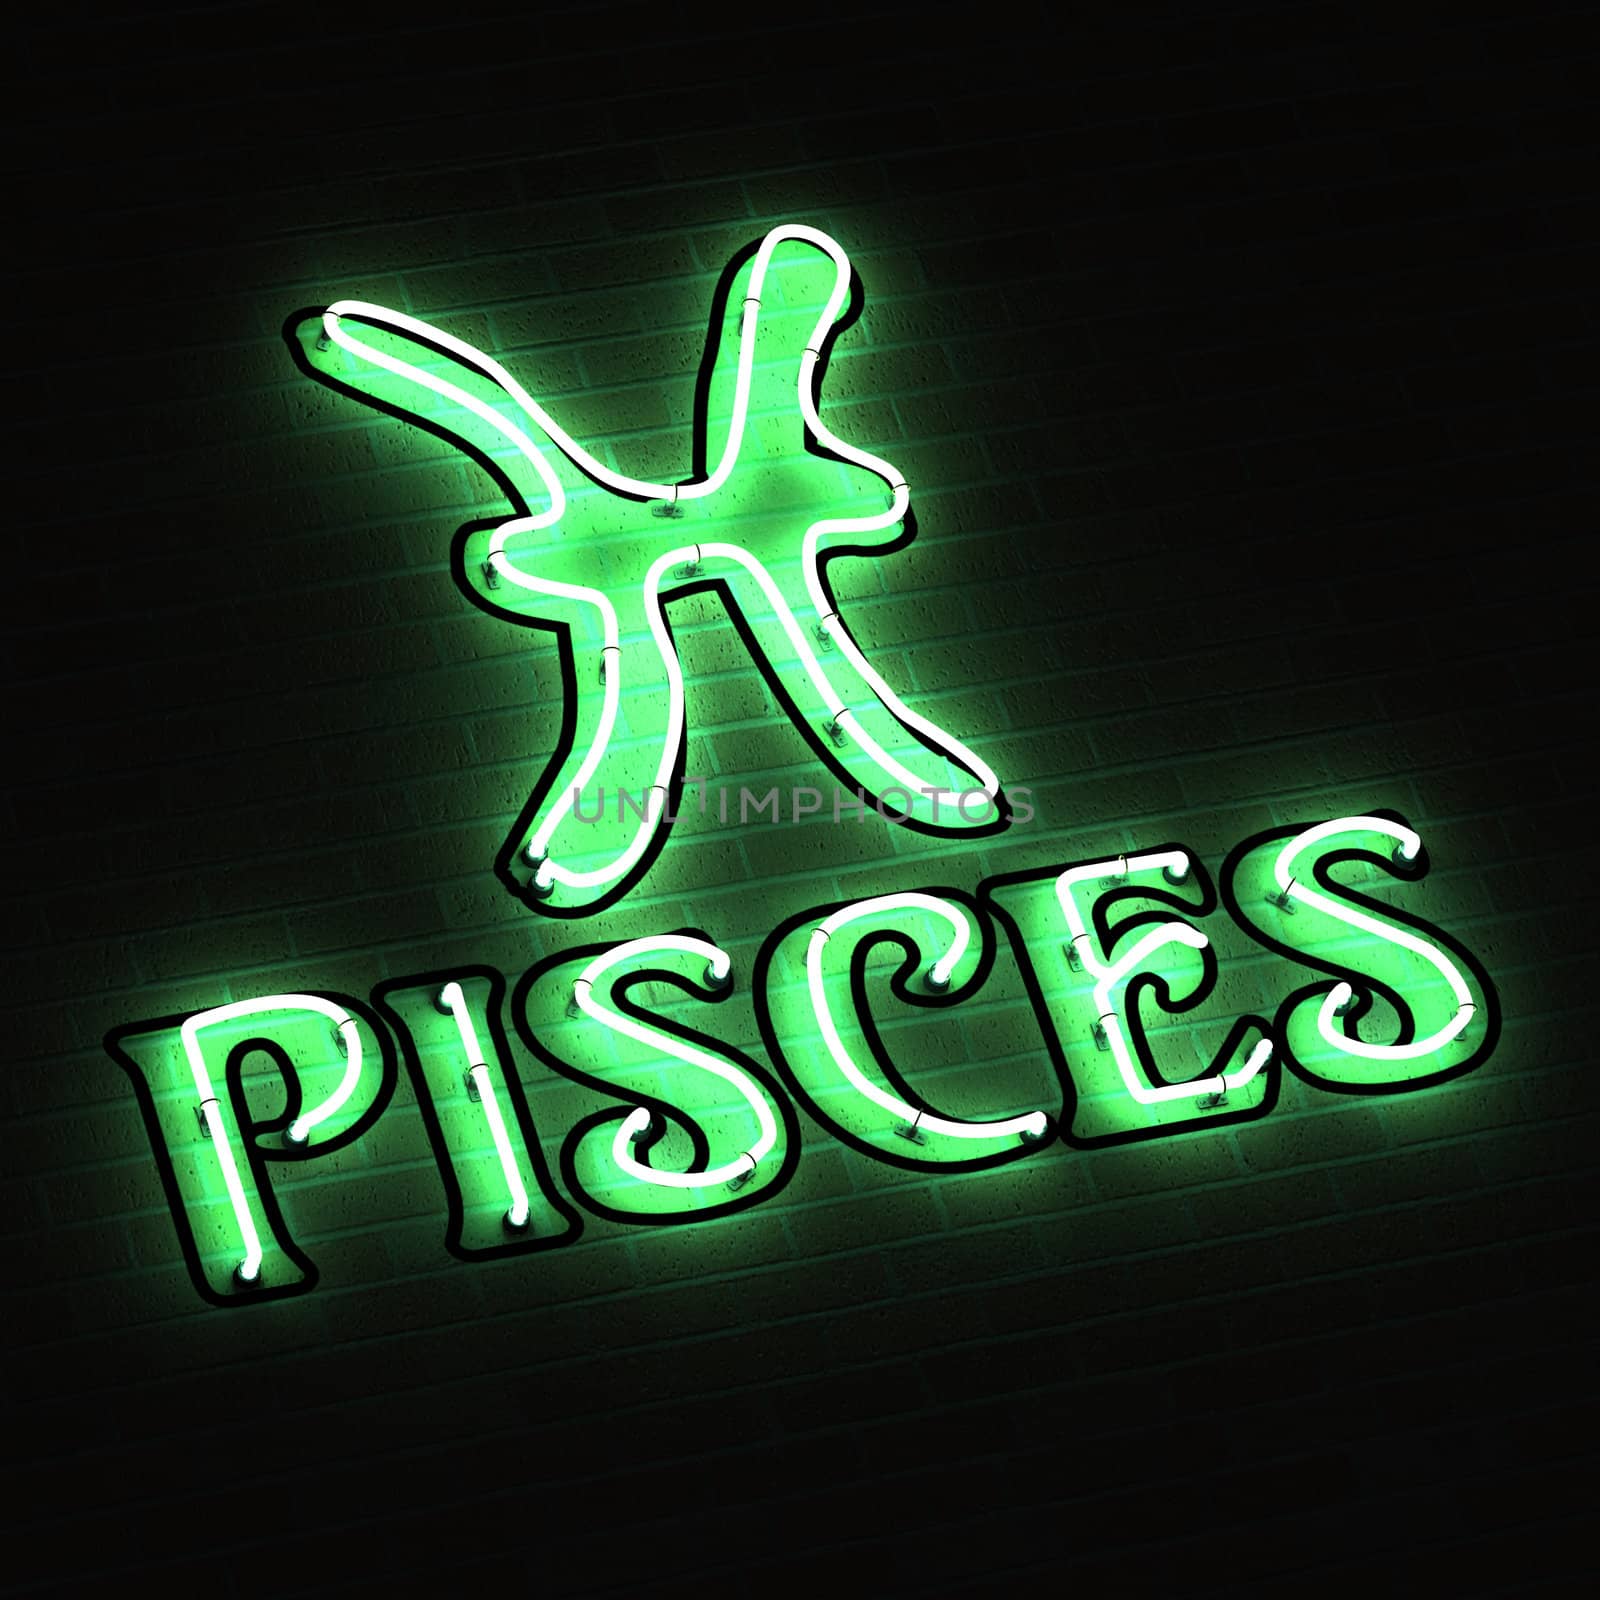 Pisces Zodiac Sign in Neon by rossstudio